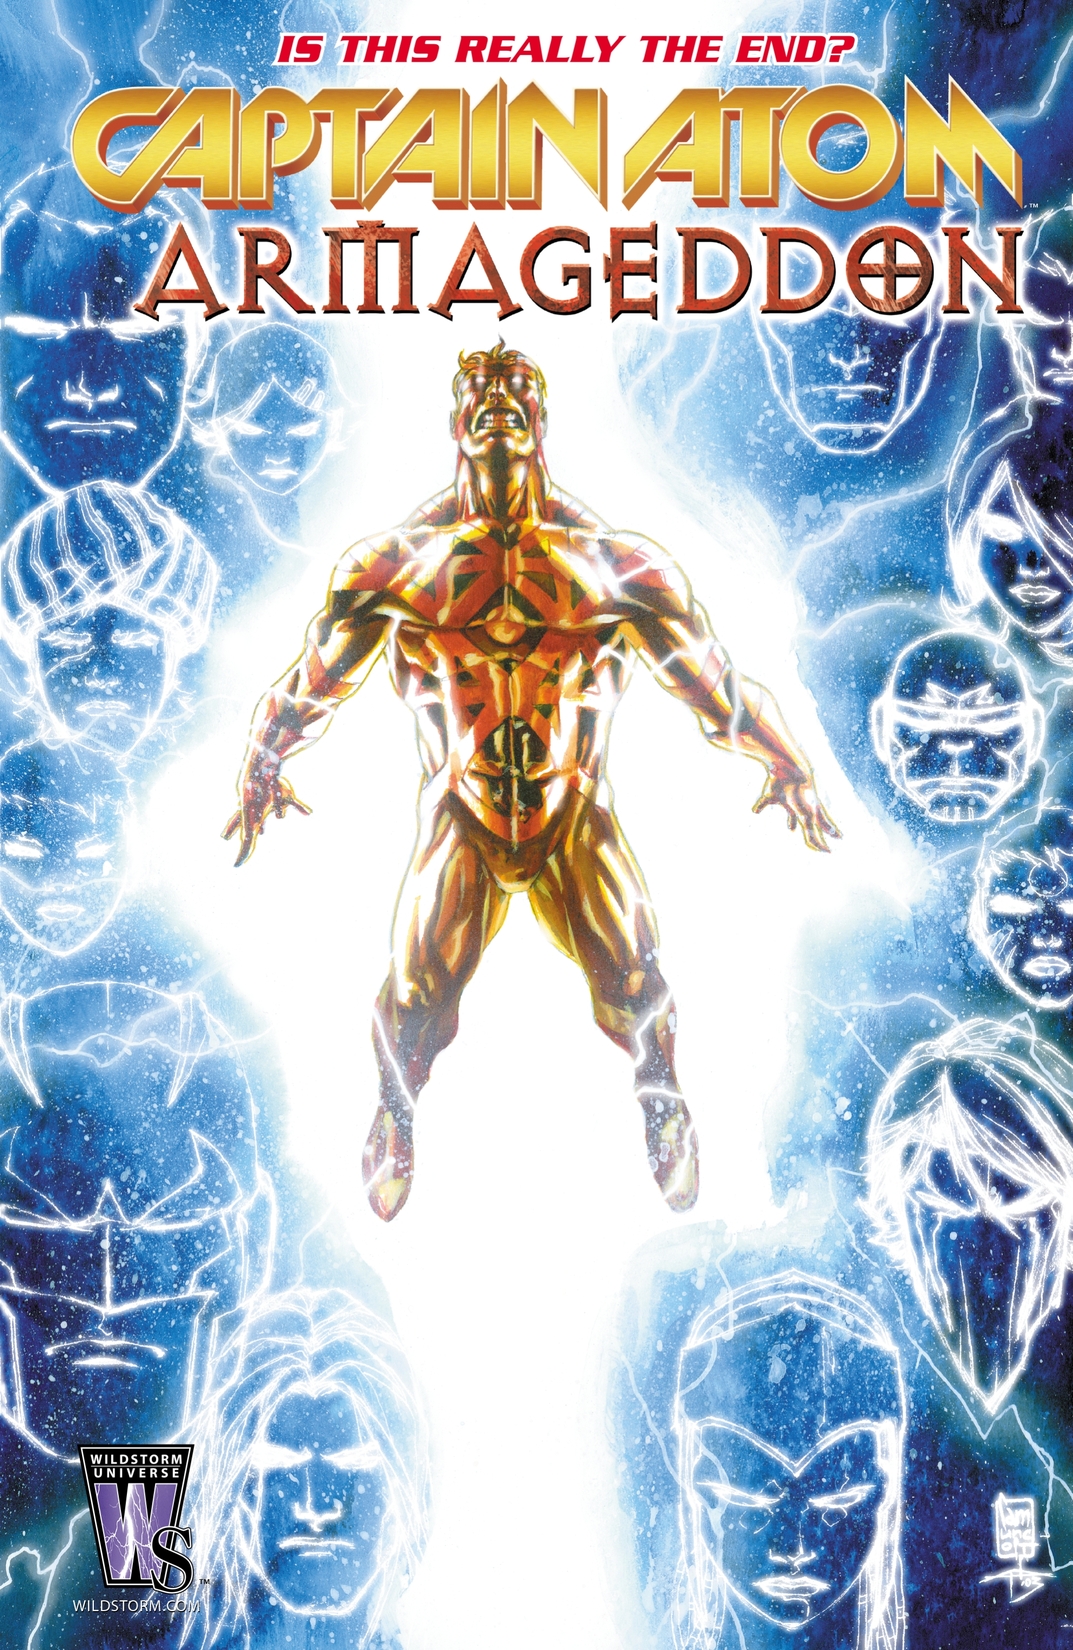 Captain Atom: Armageddon #9 preview images